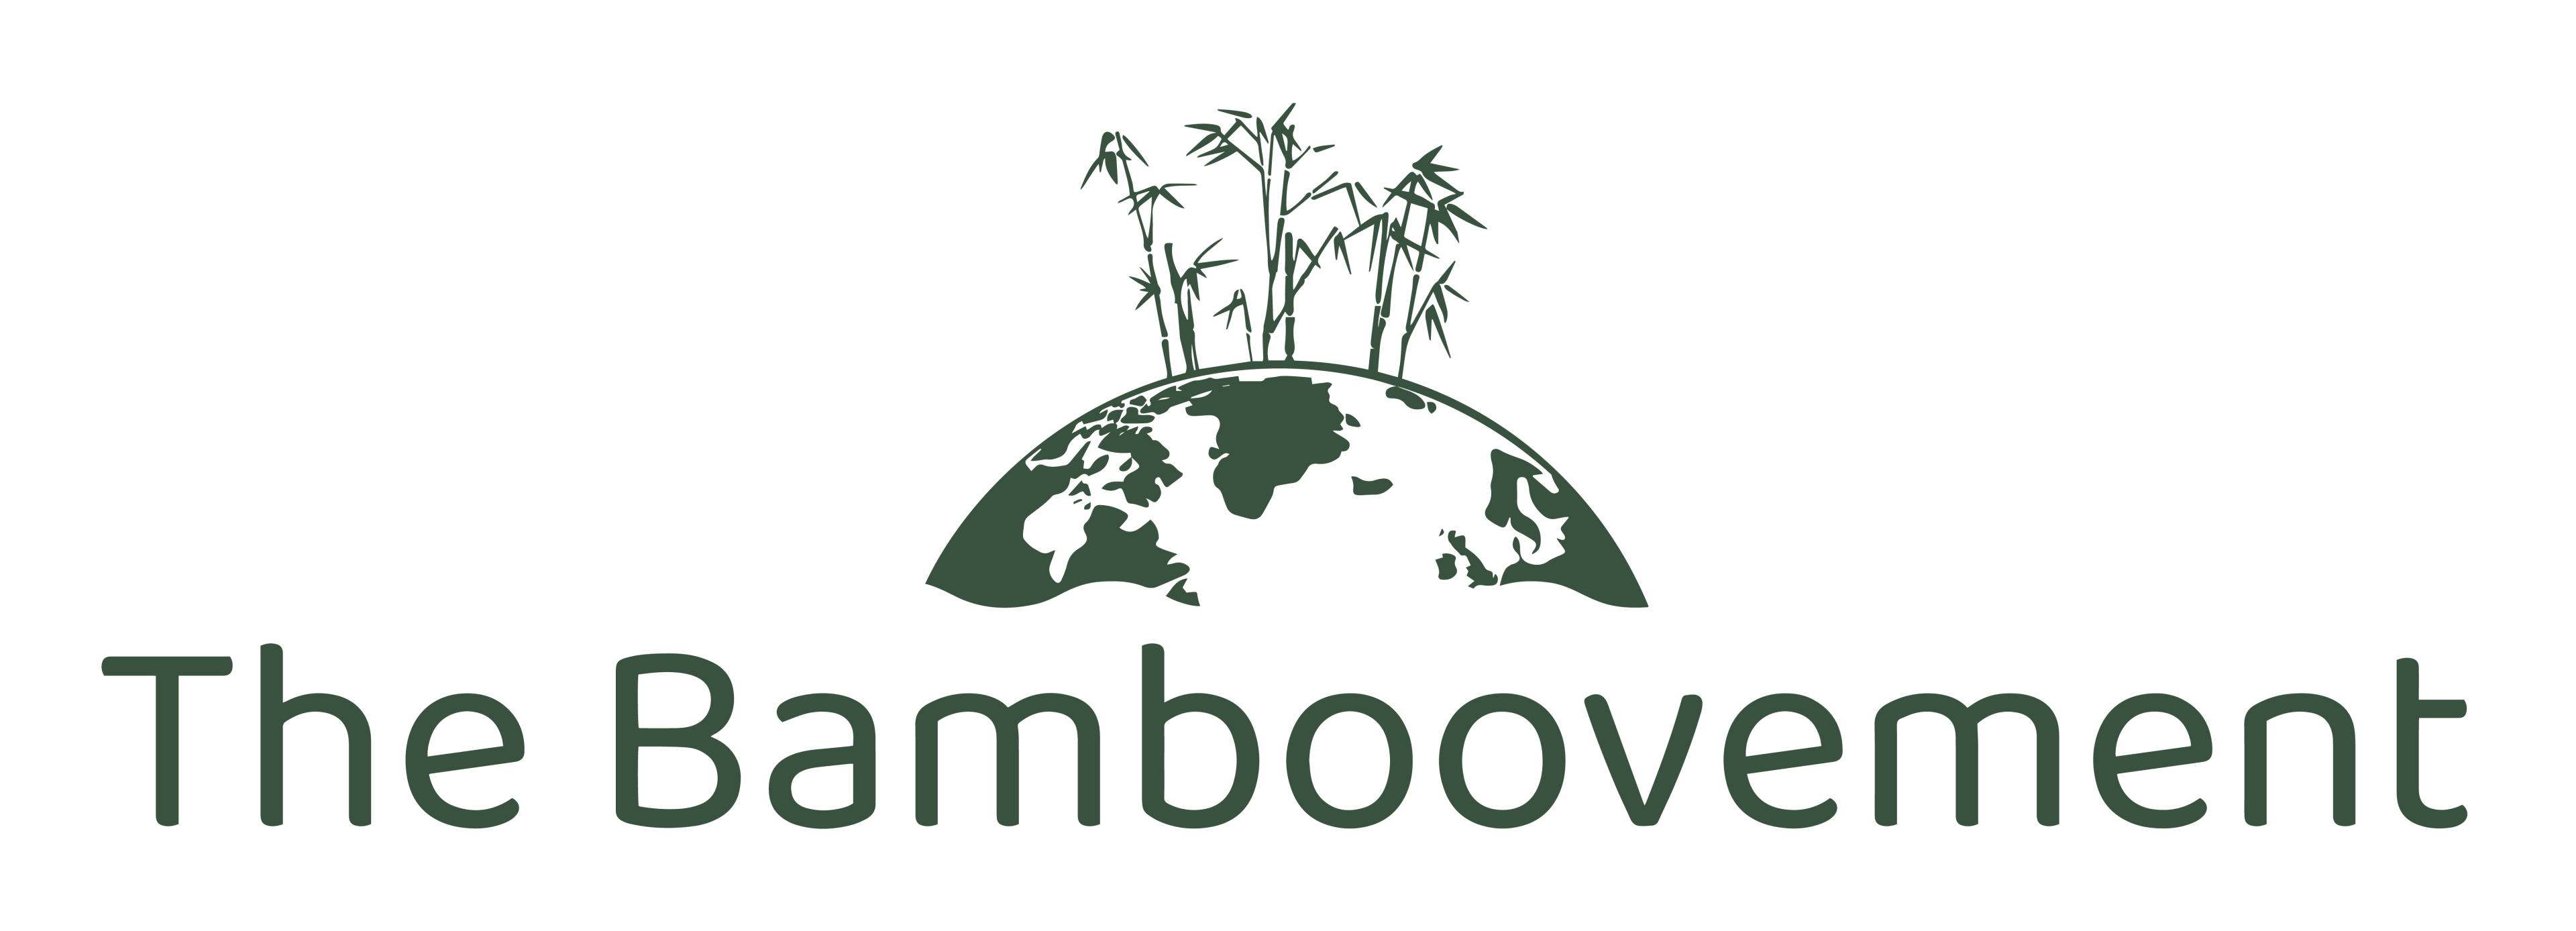 The Bamboovement